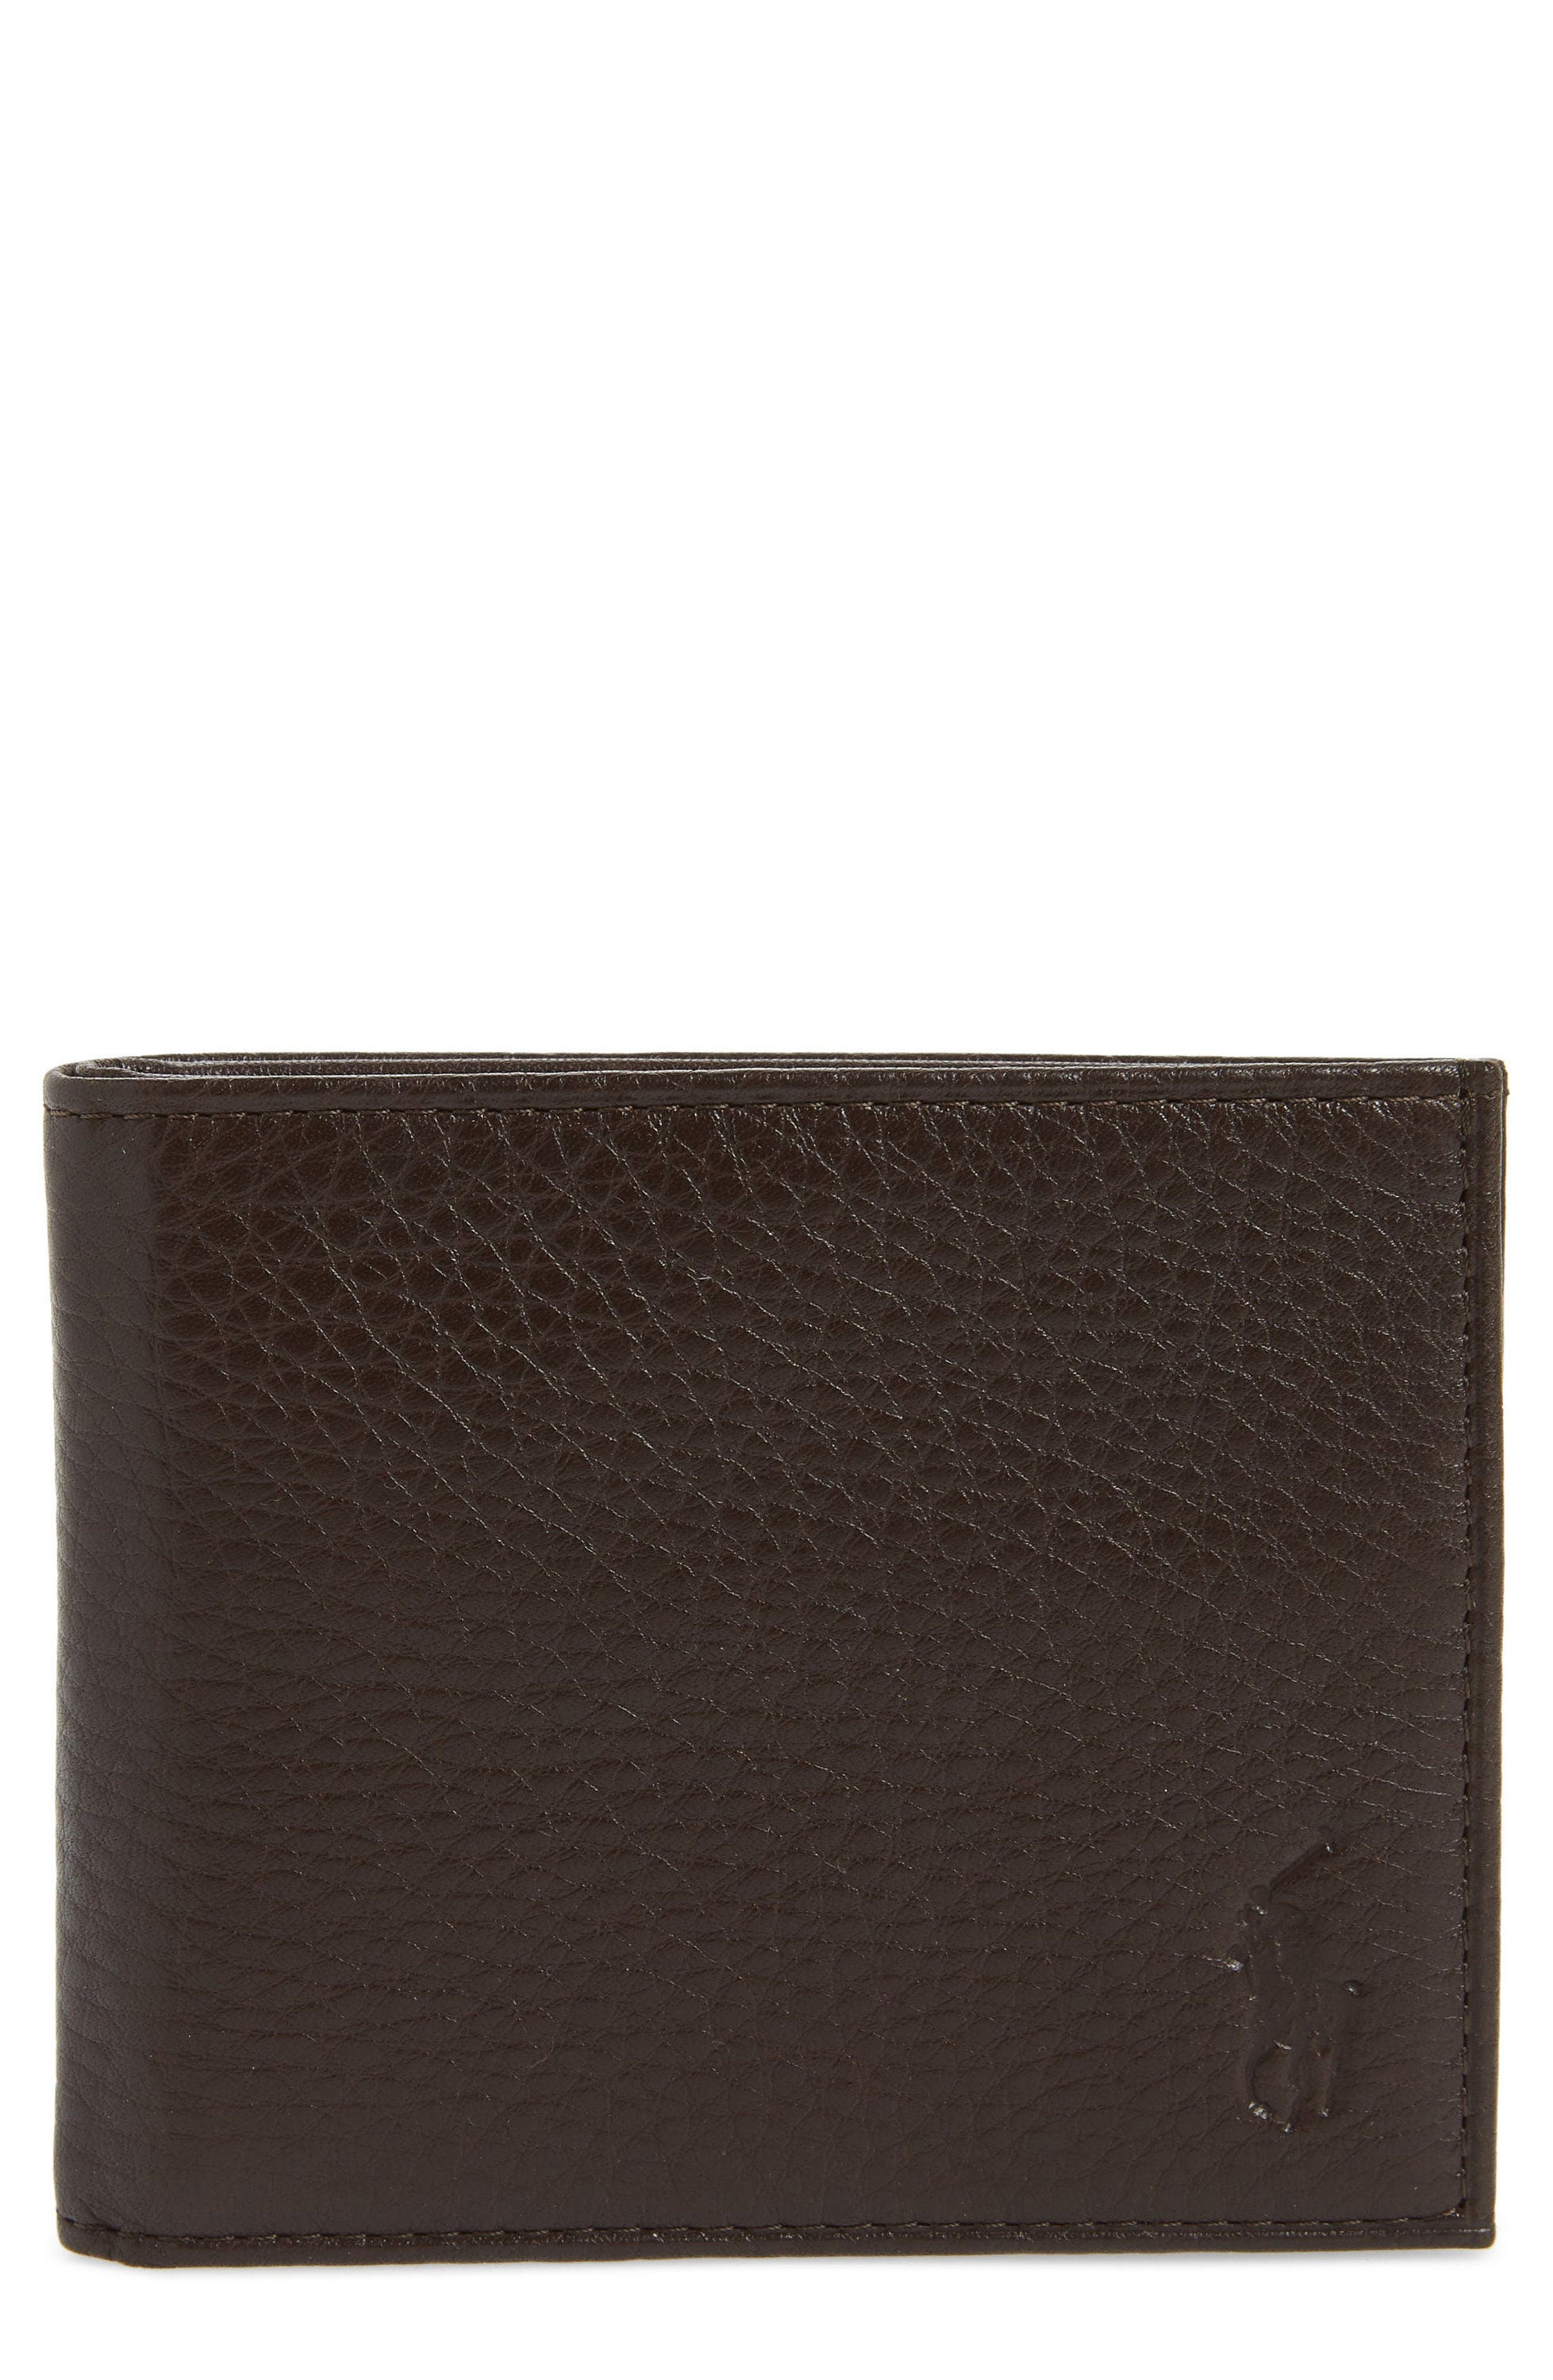 Polo Ralph Lauren Wallet Leather Metal Logo Stylish Men's Brown Bi